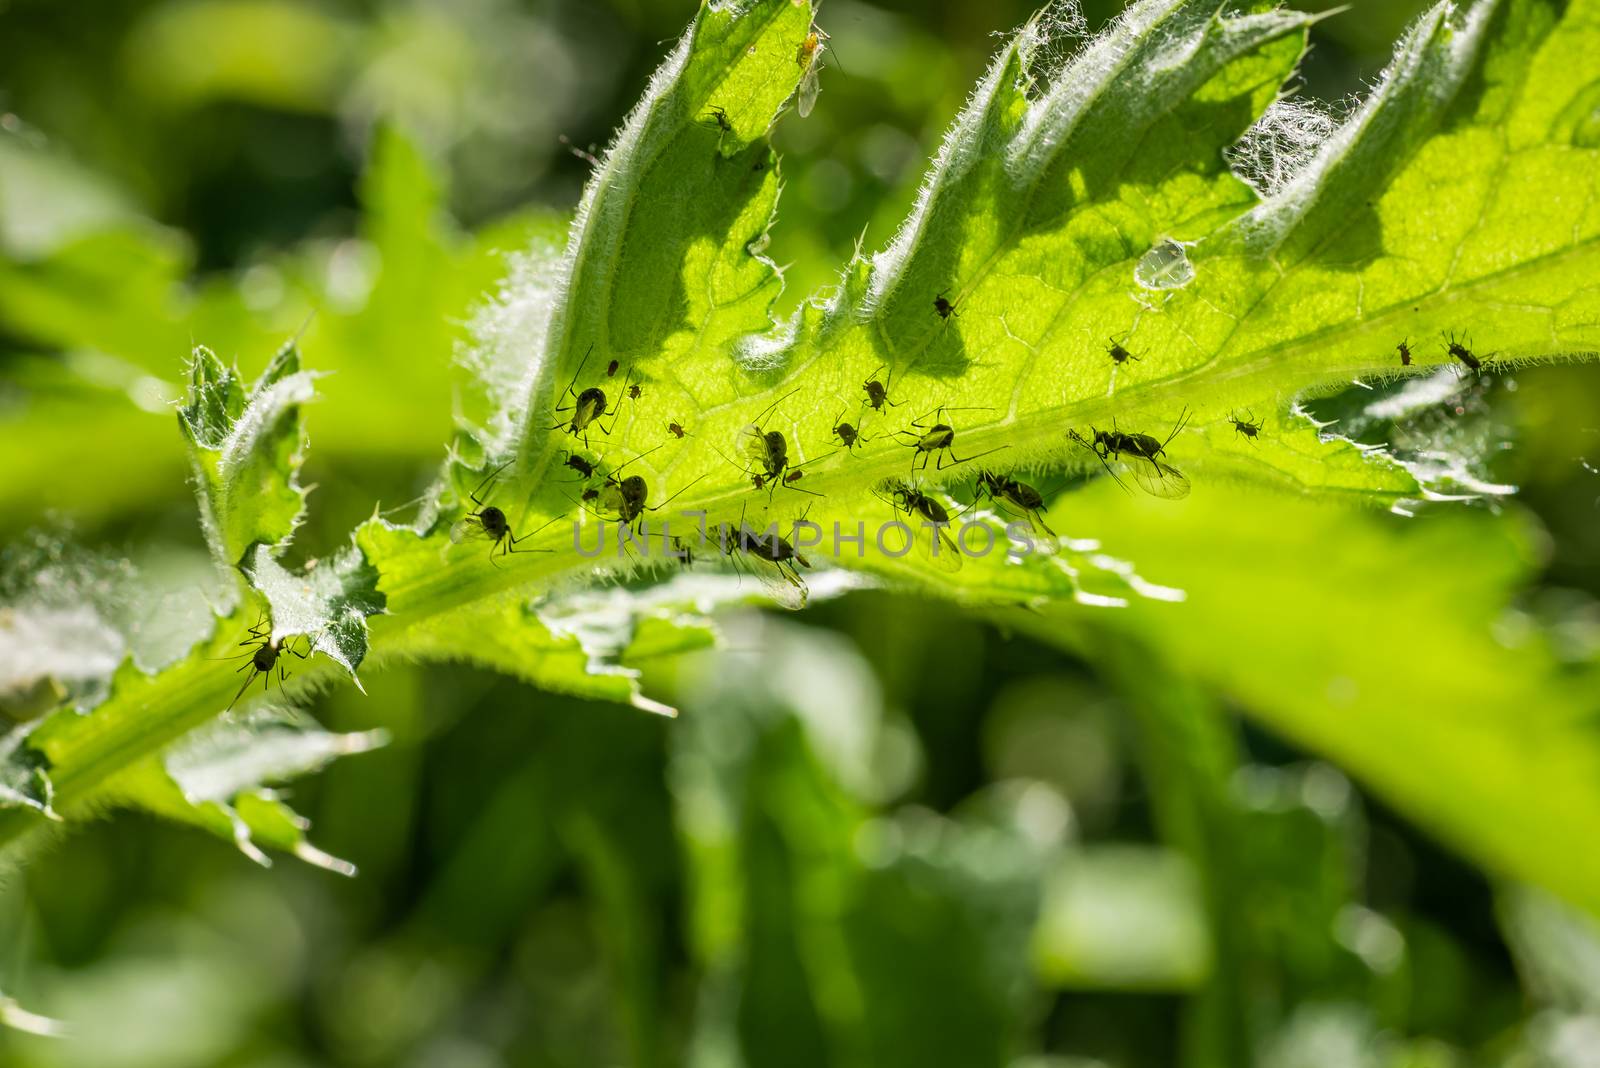 Macro shot of giant black aphid infestation on thistle plant leaves.